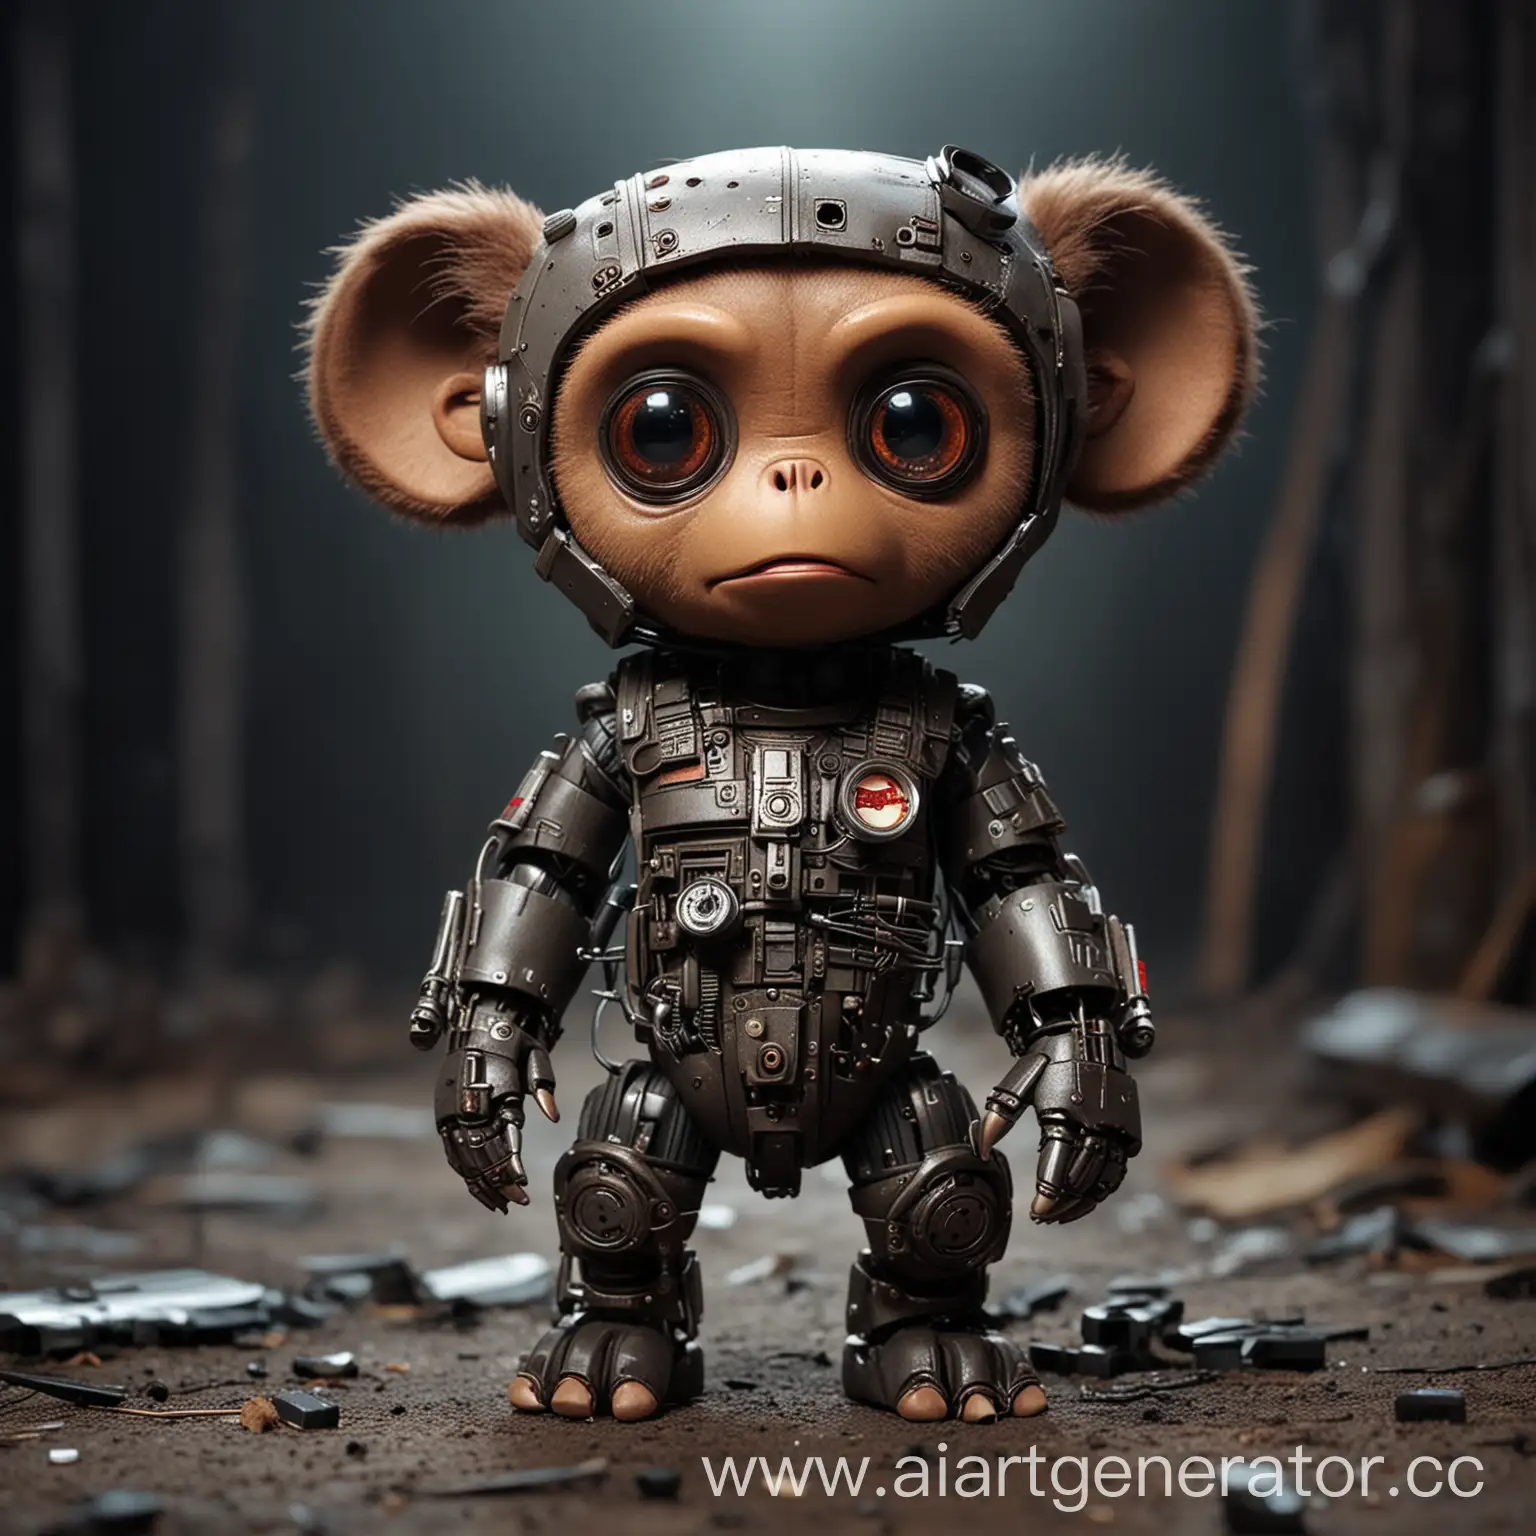 Cheburashka-as-Terminator-Robot-Creature-with-Humanlike-Qualities